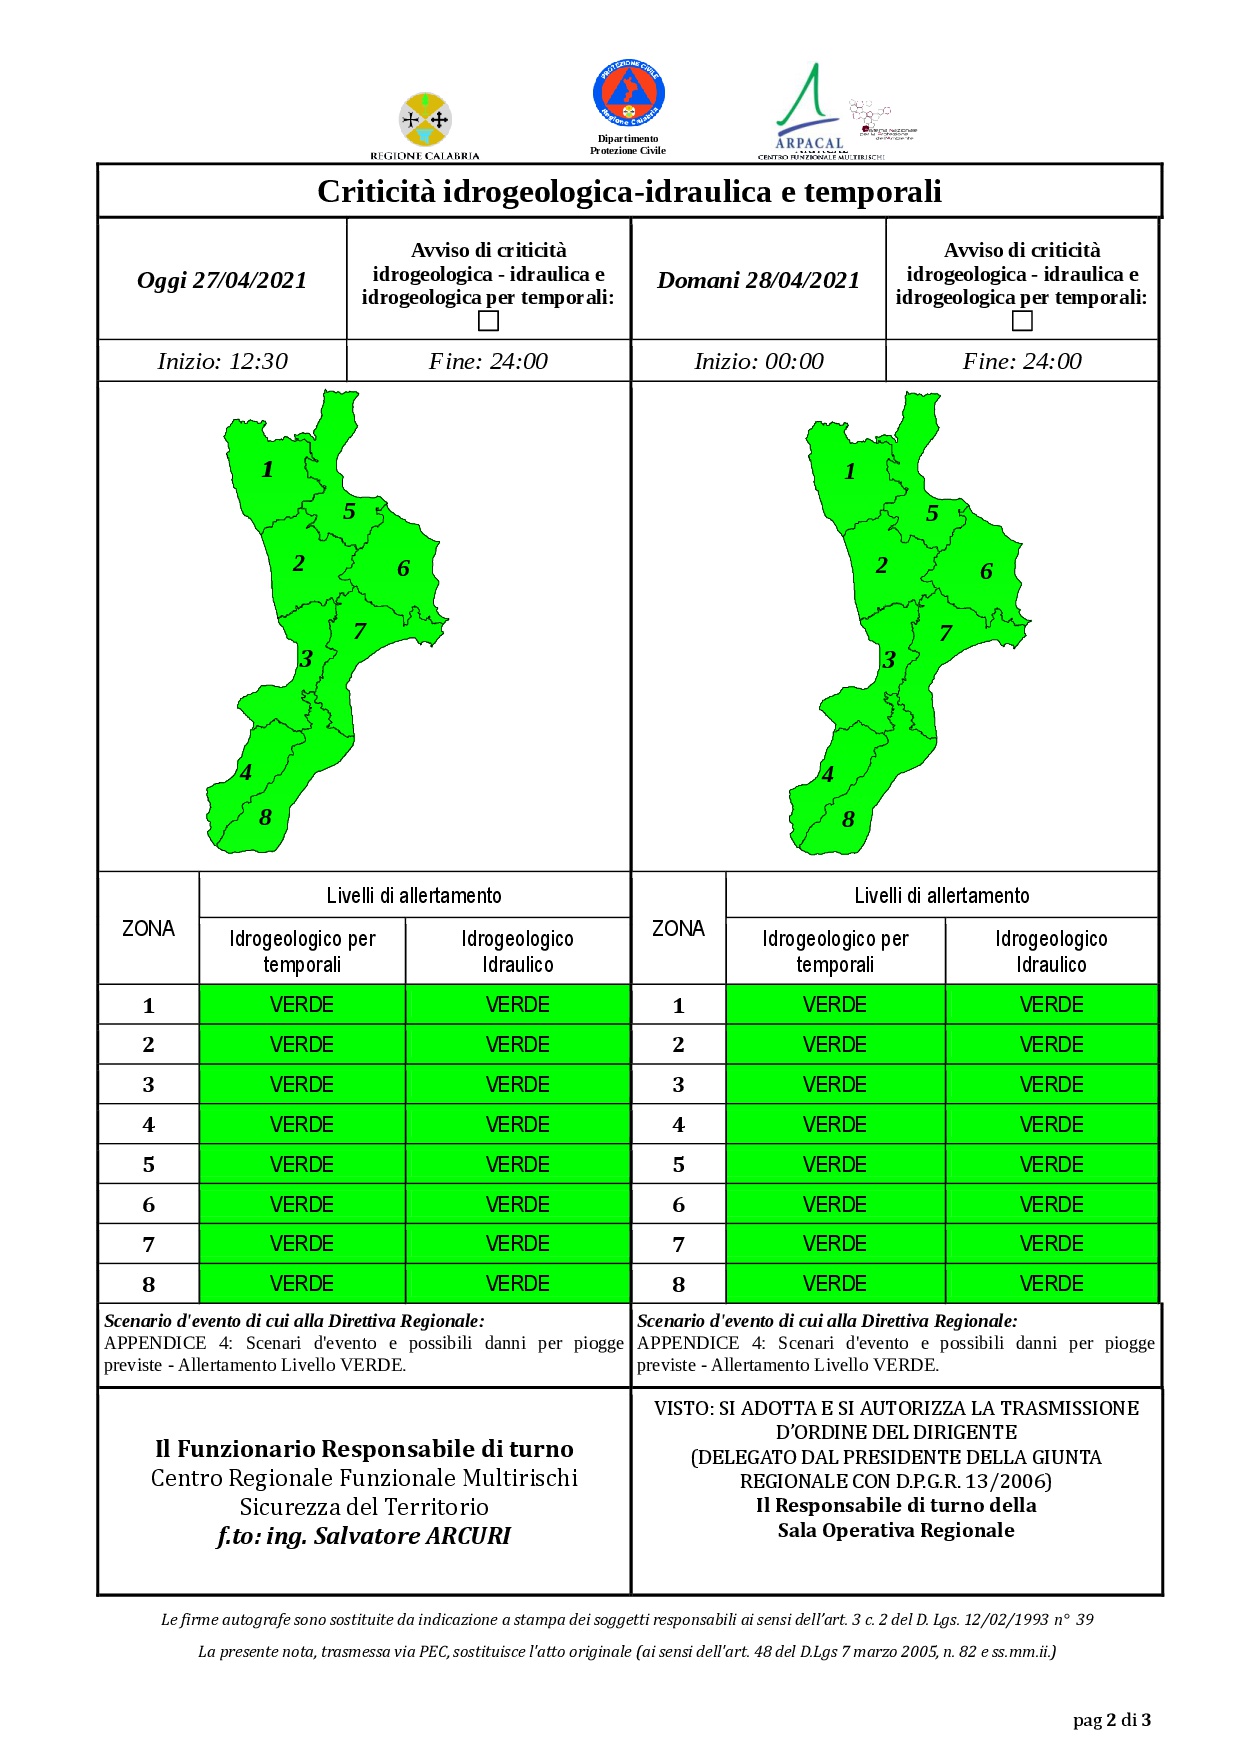 Criticità idrogeologica-idraulica e temporali in Calabria 28-04-2021